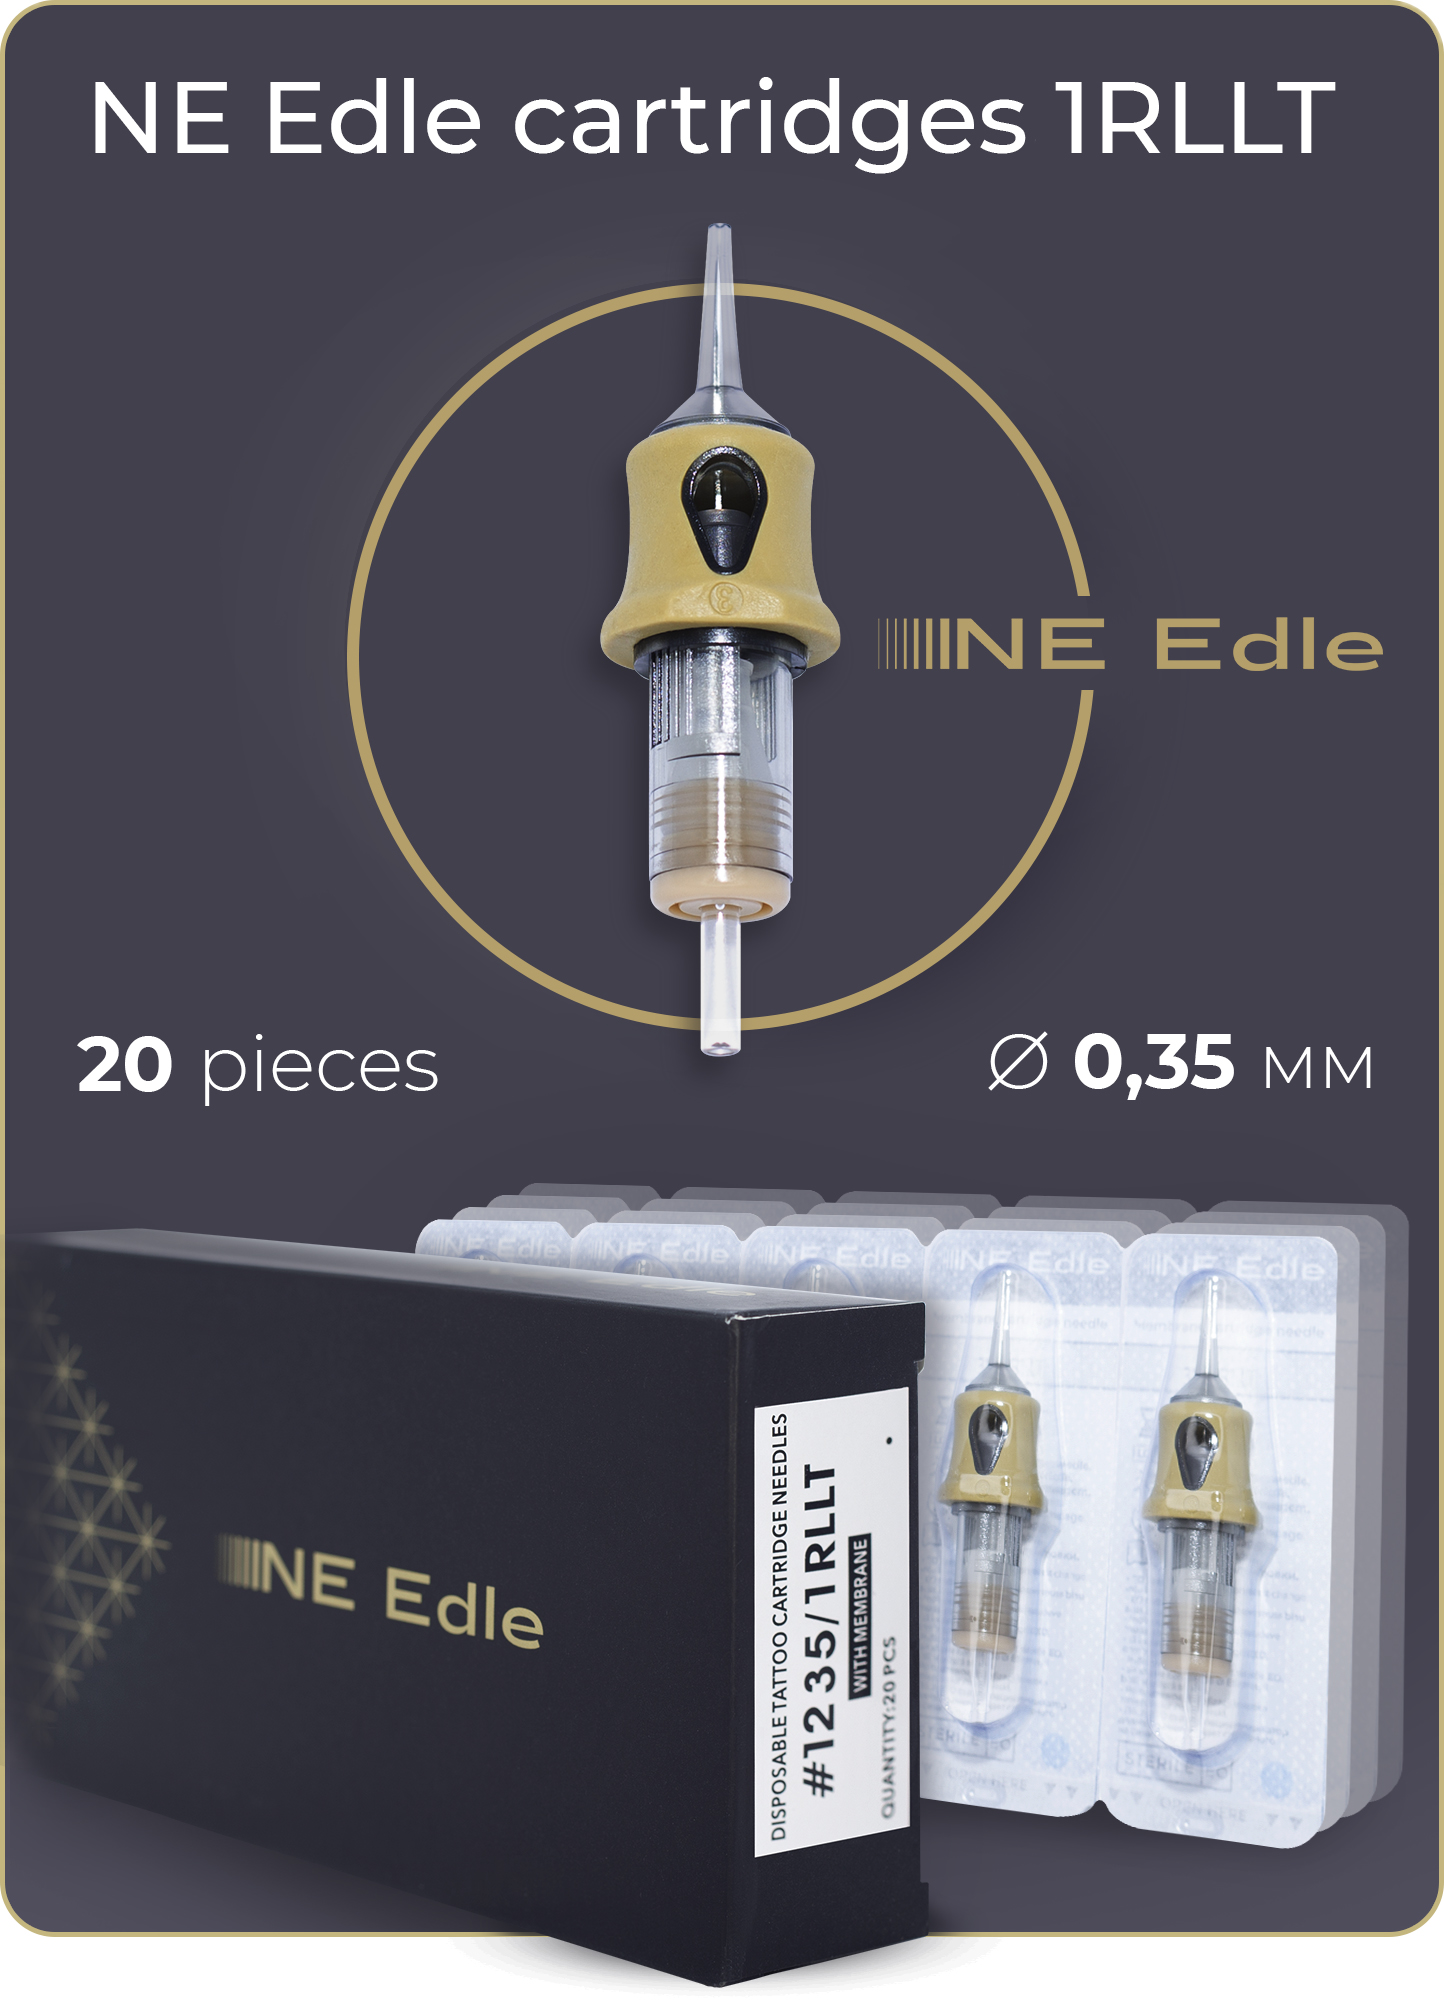 NE Edle Cartridges 0.35MM/1RLLT - 20 pieces